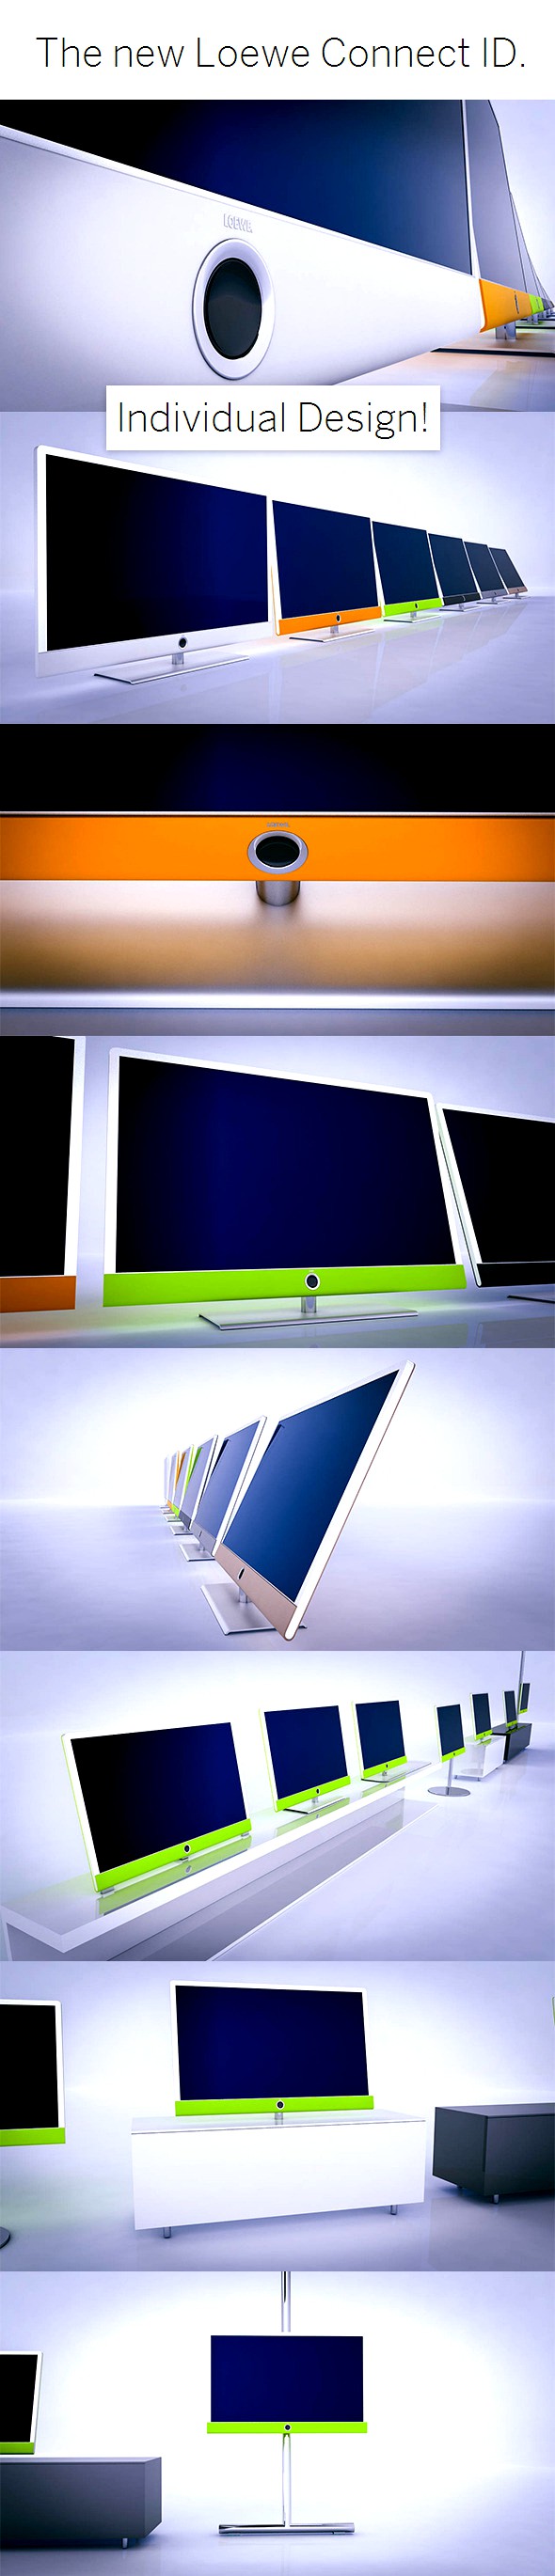 Loewe Concept ID TV